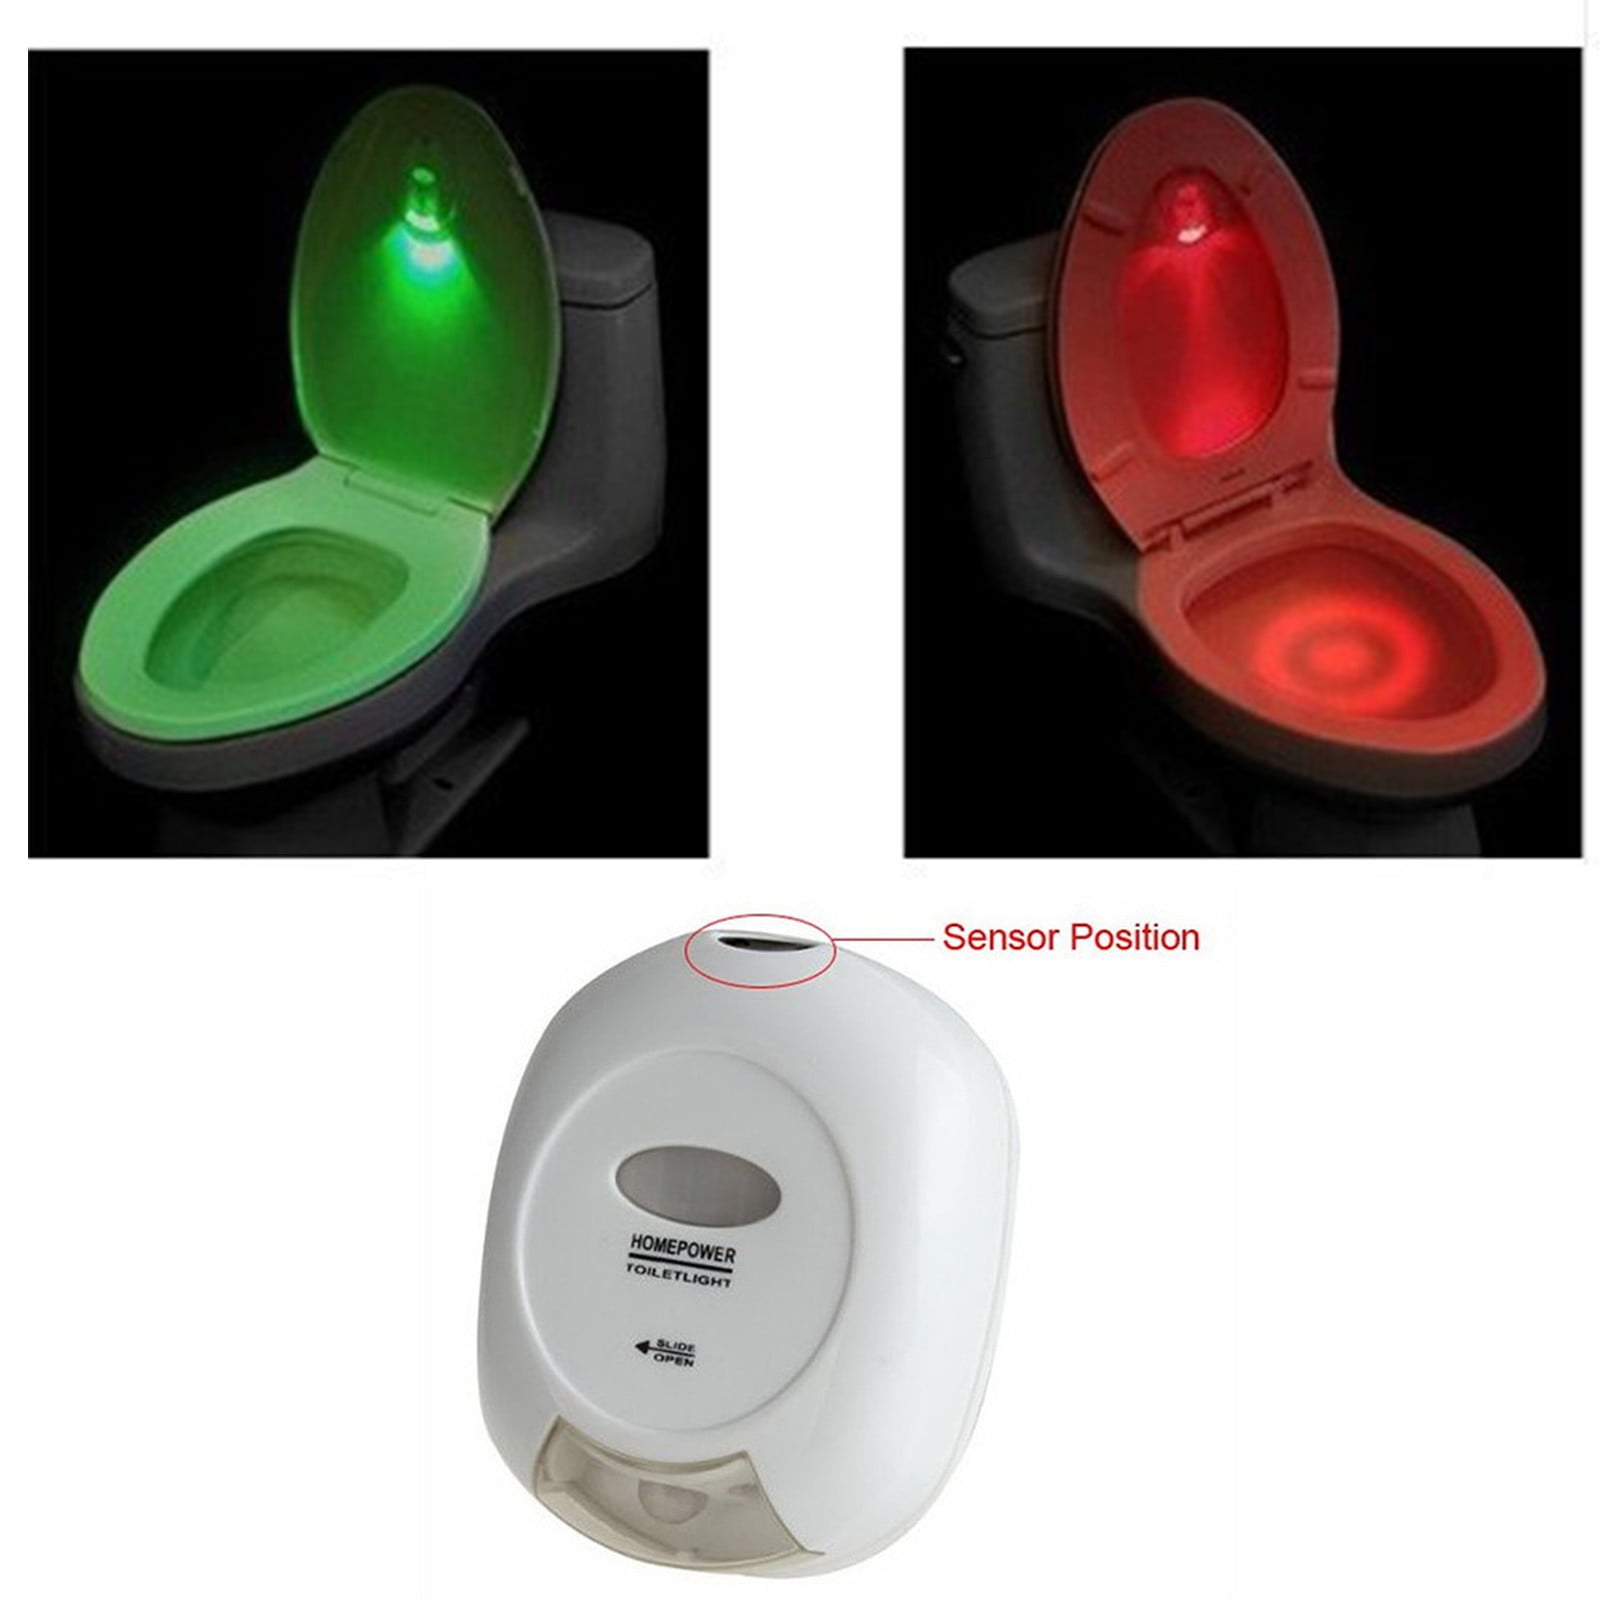 The Original Toilet Bowl Night Light Gadget Funny Led Motion